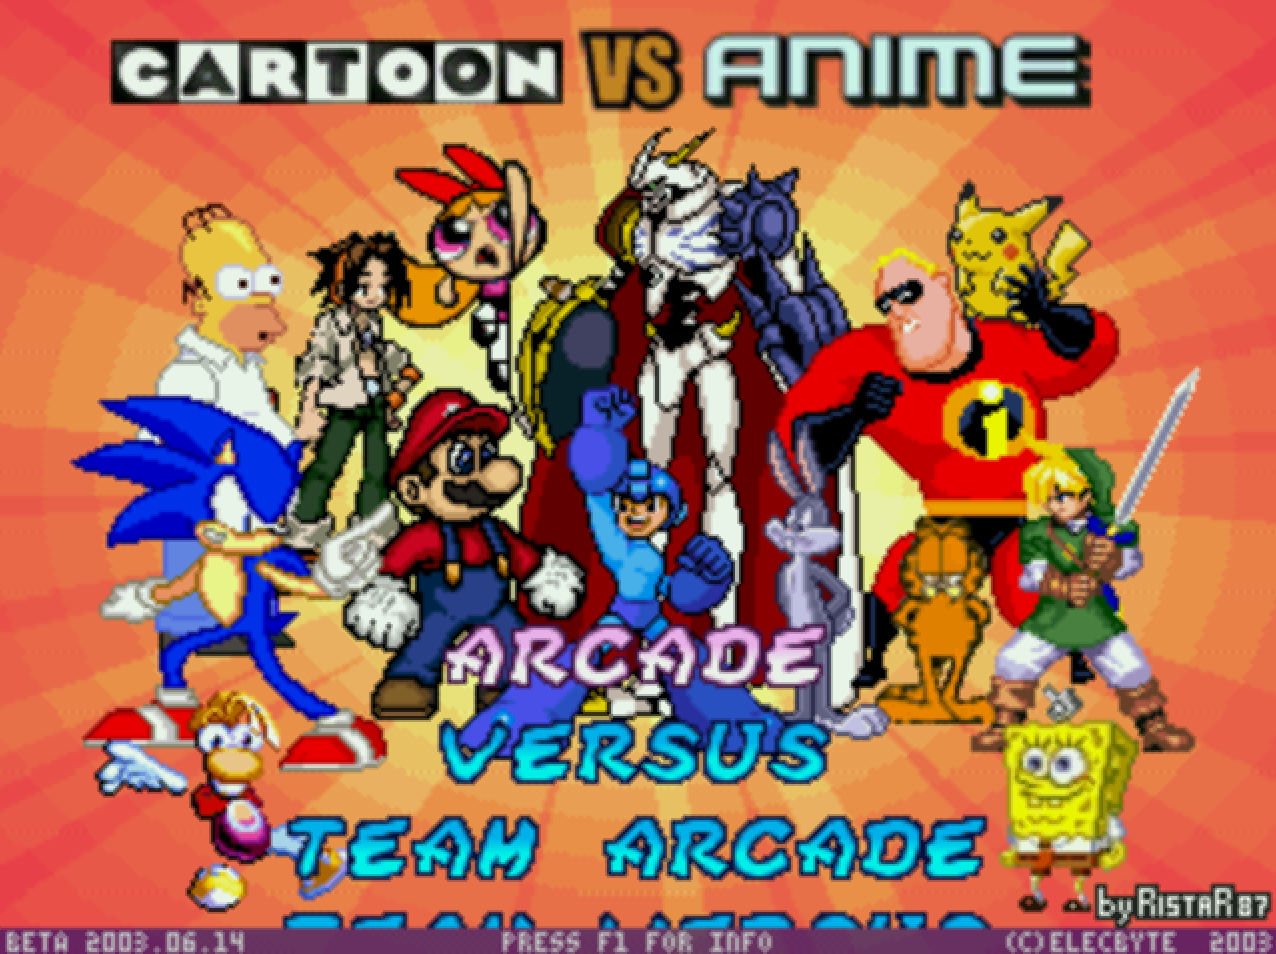 Cartoon VS Anime